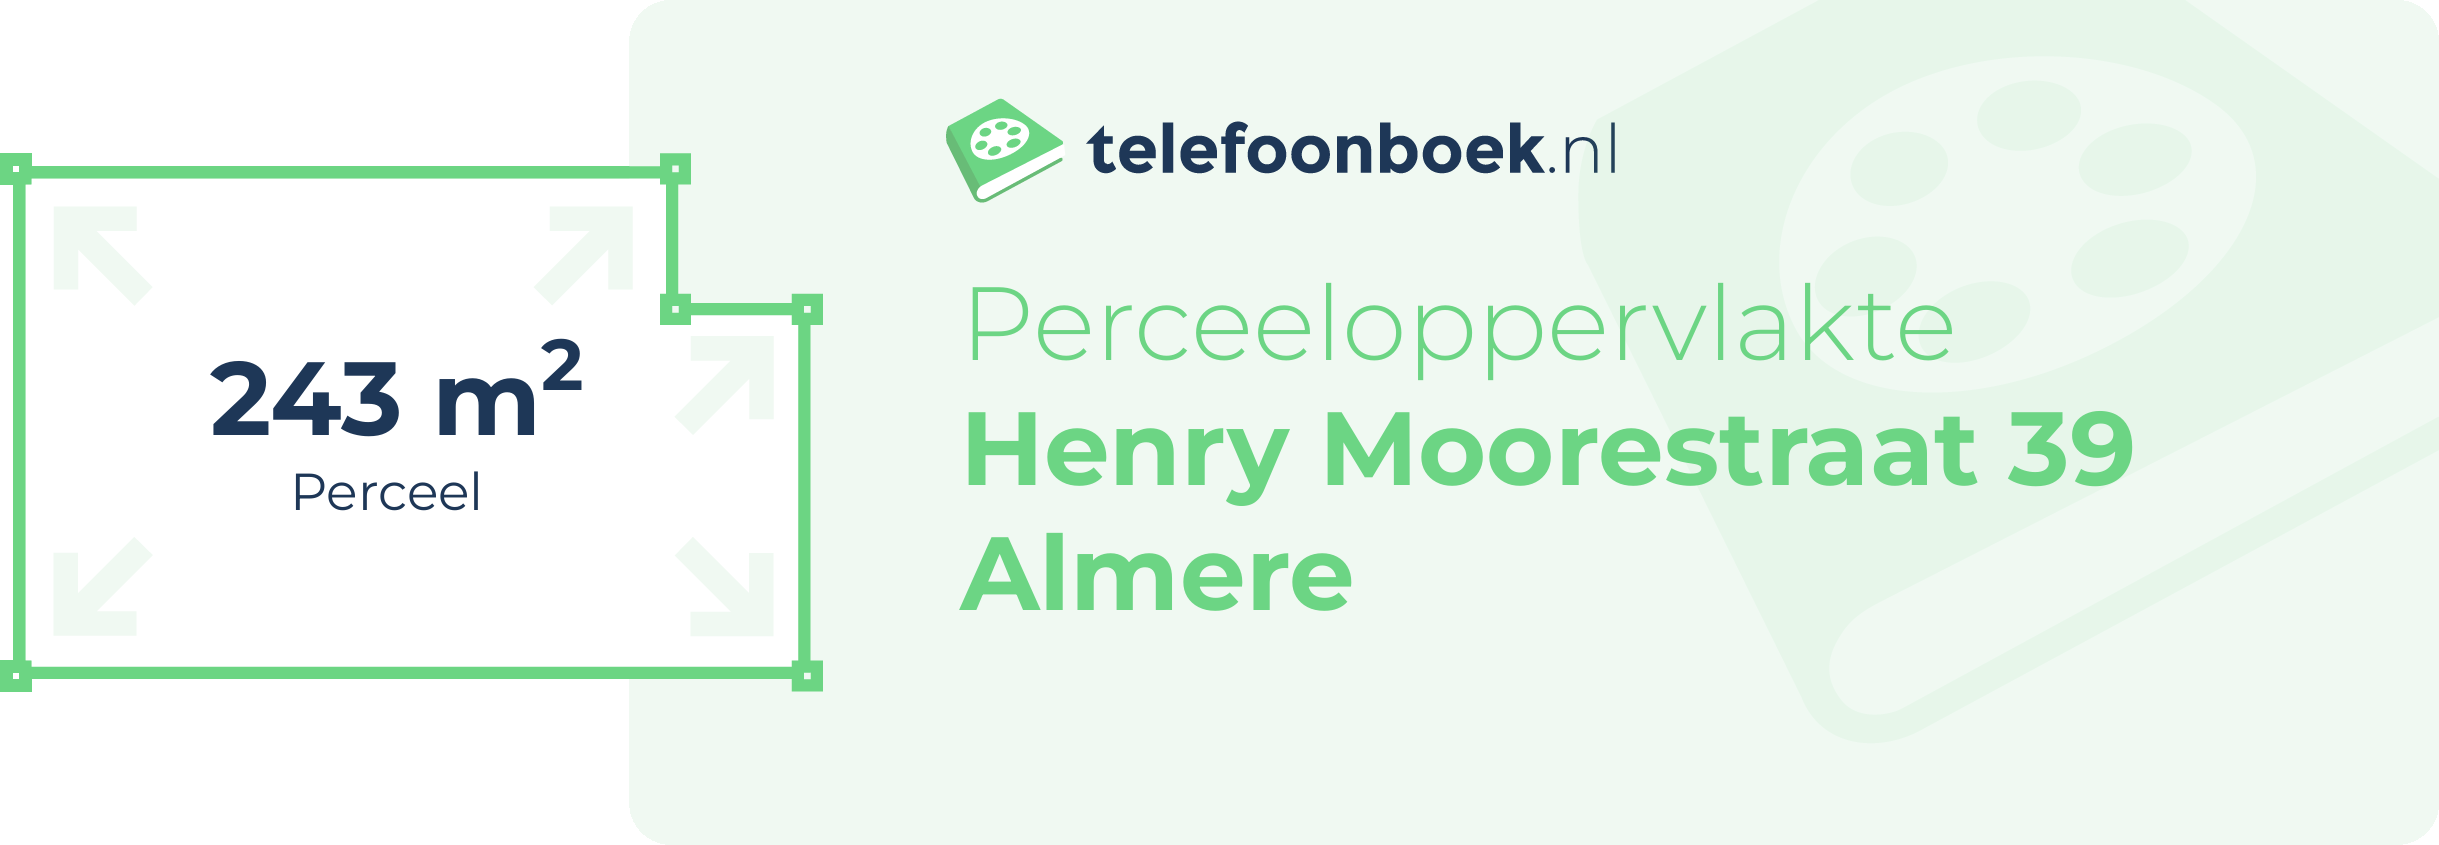 Perceeloppervlakte Henry Moorestraat 39 Almere